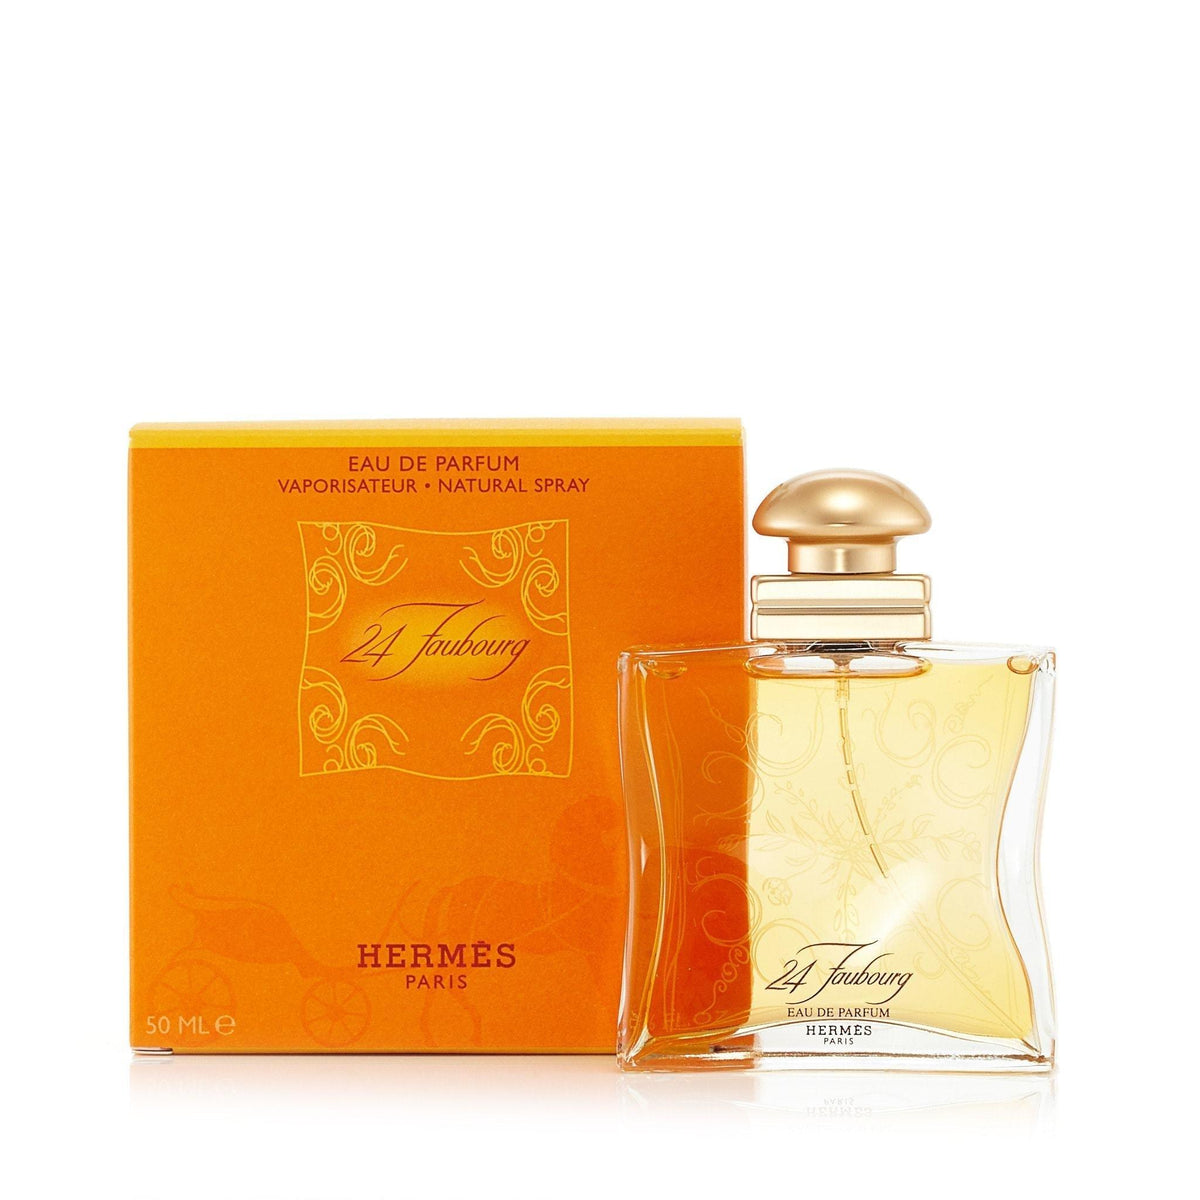 24 Faubourg Eau de Parfum Spray for Women by Hermes 1.6 oz.